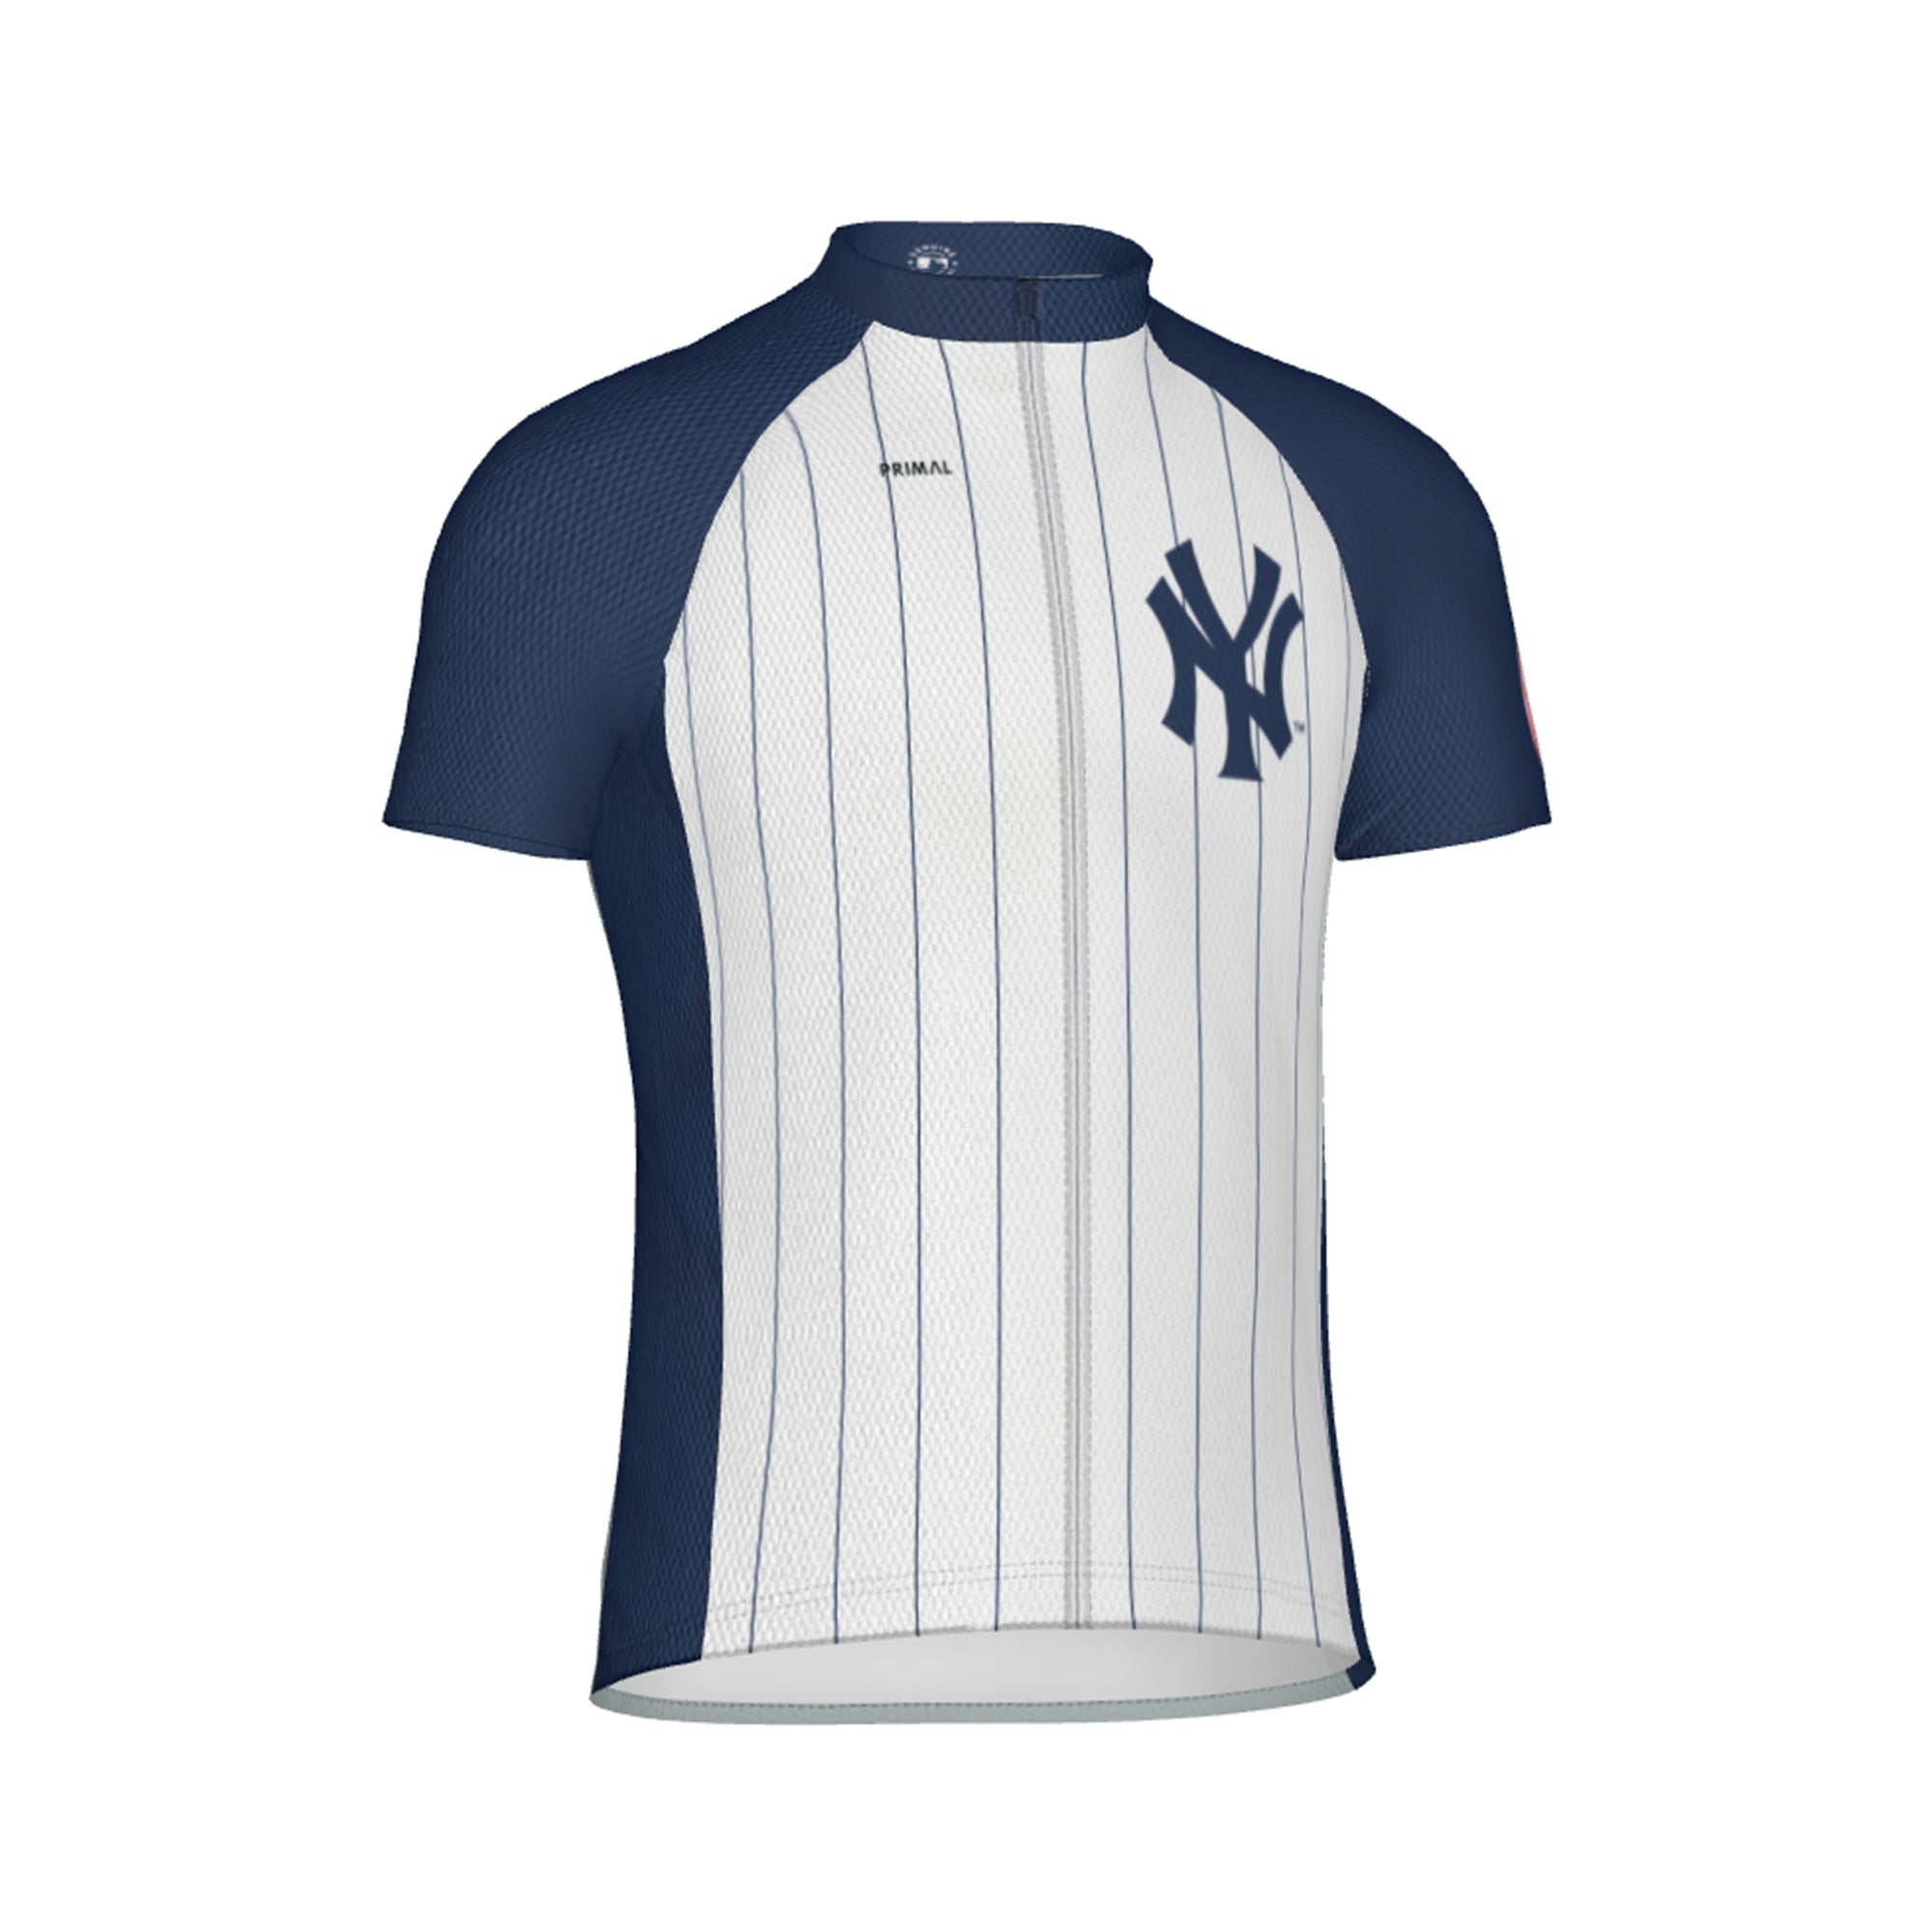 Baseball jersey  Ny yankees, Baseball jerseys, Yankees baseball